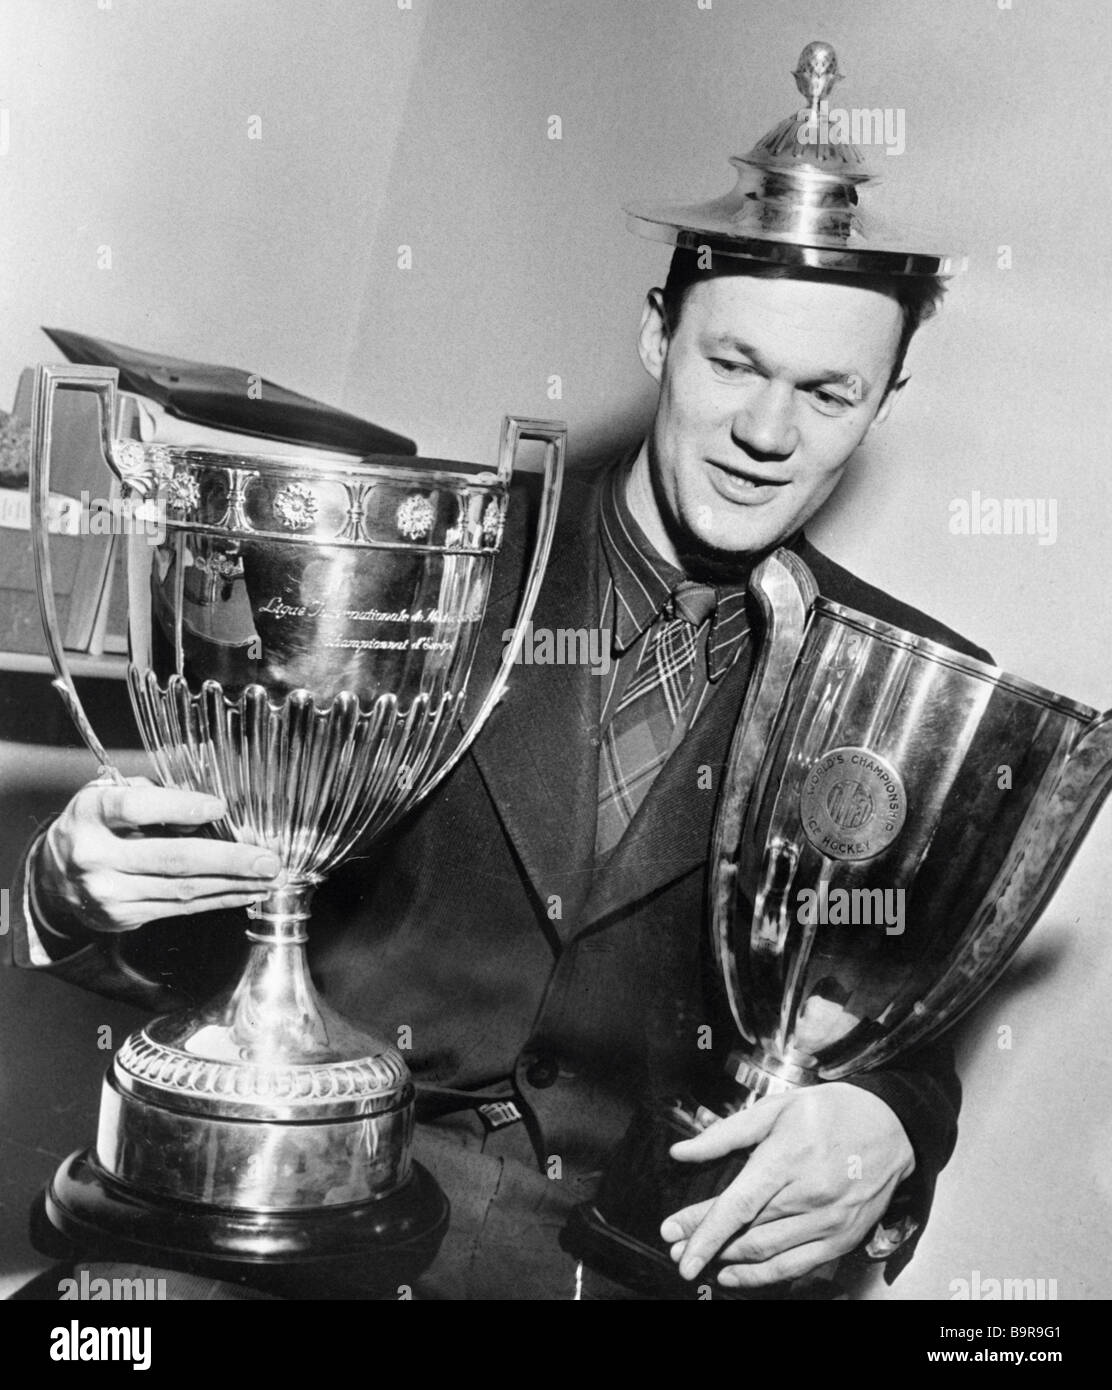 vsevolod-bobrov-ussr-football-champion-in-1946-1948-with-world-and-B9R9G1.jpg